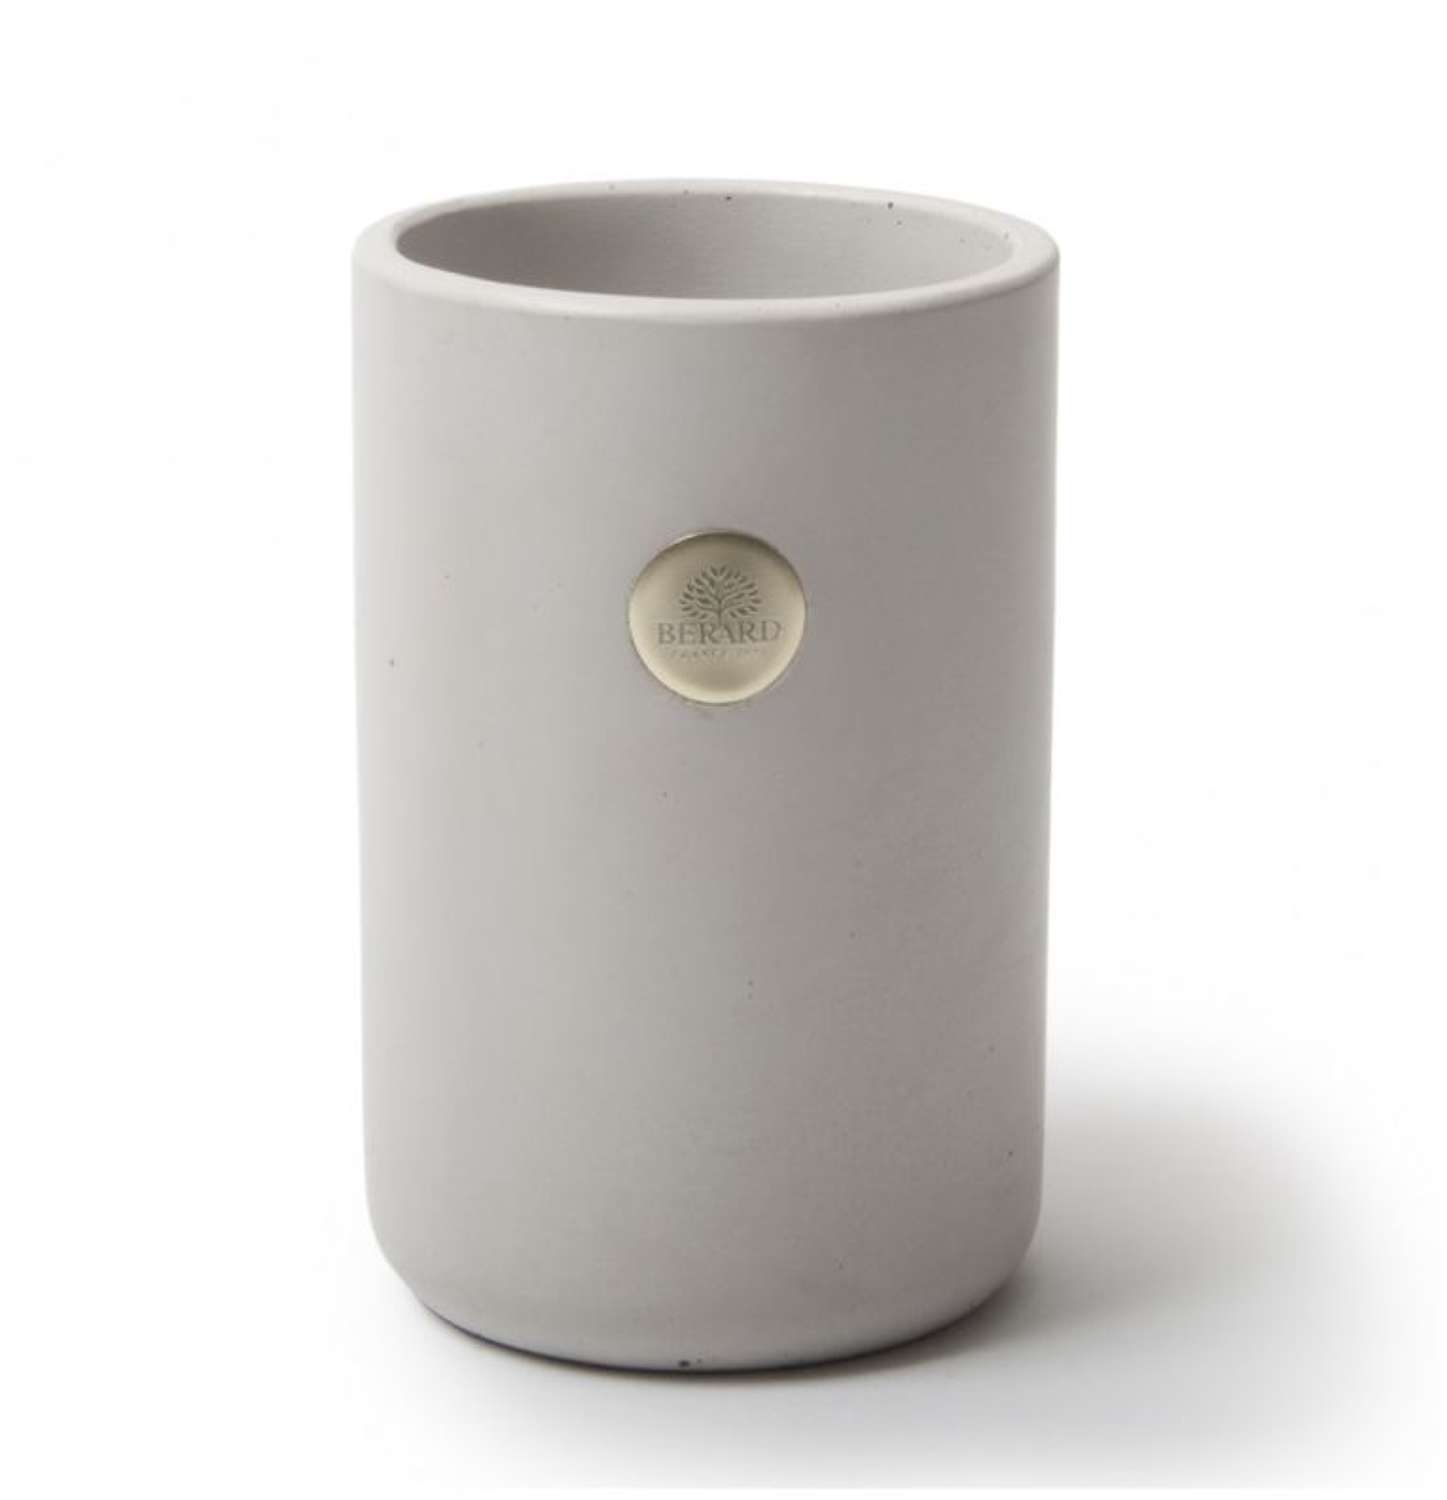 Berard Millenari Utensil Pot and Wine Cooler - White Concrete